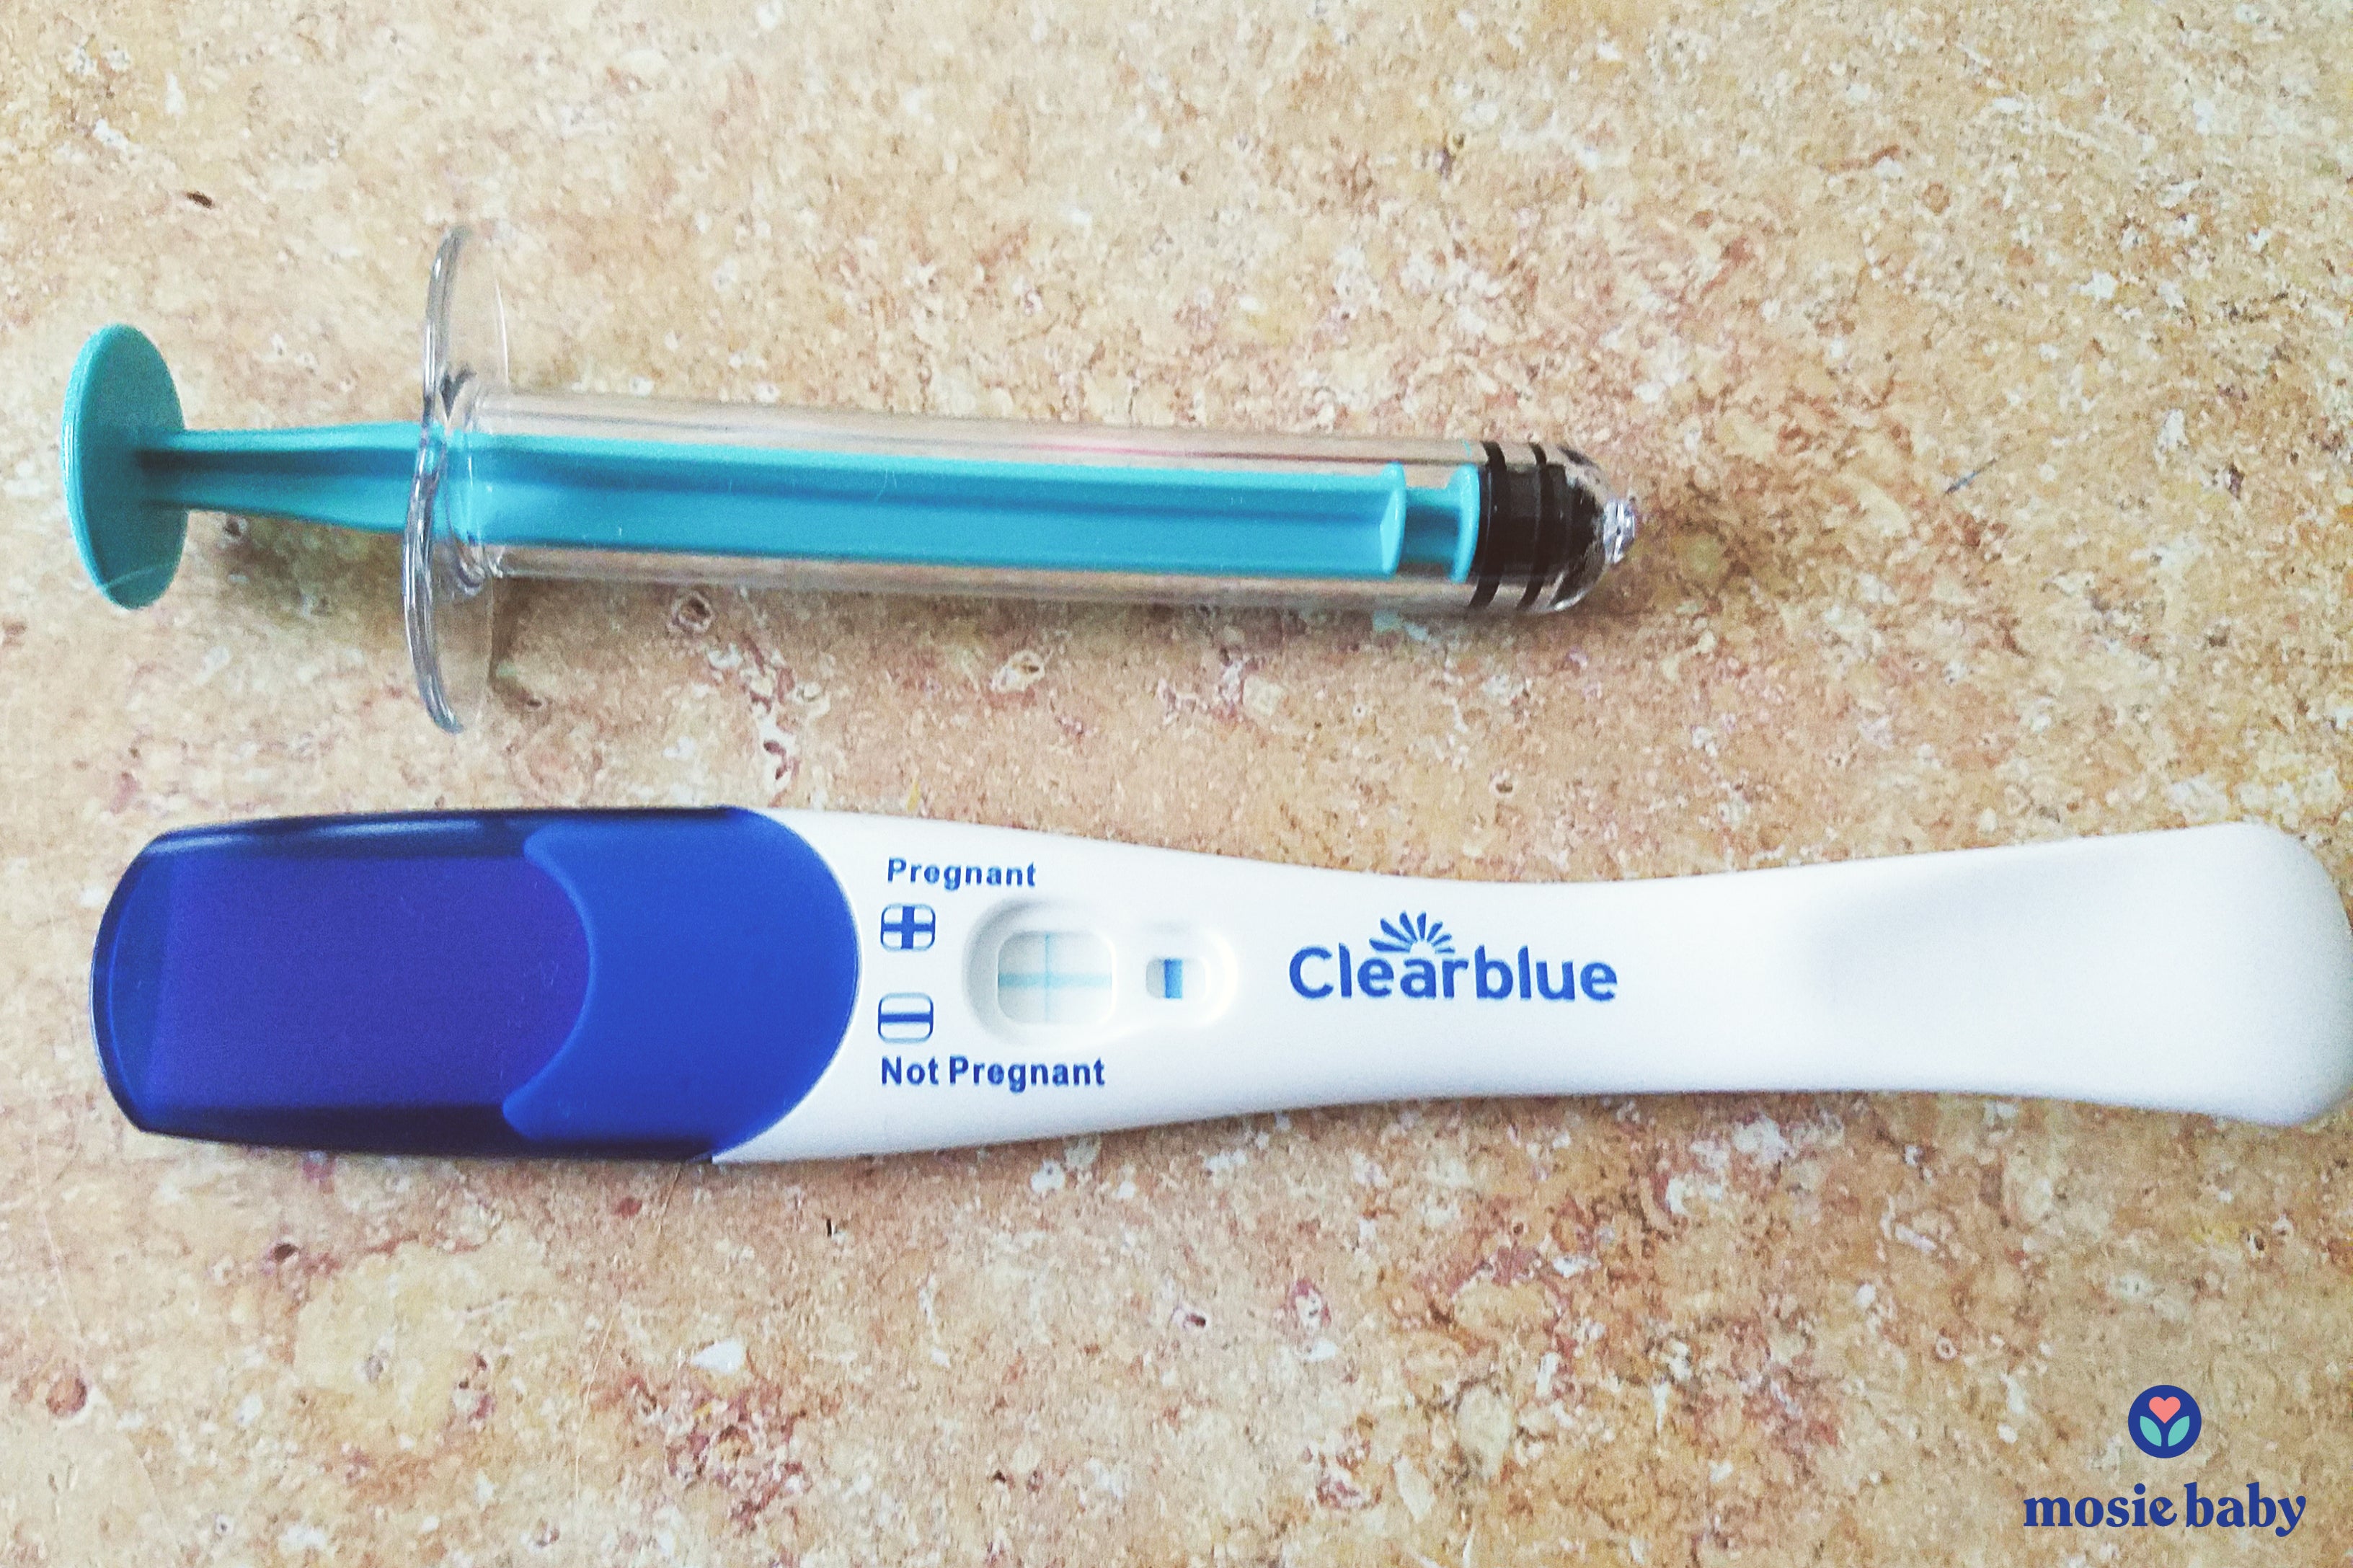 positive pregnancy test next to a mosie baby syringe